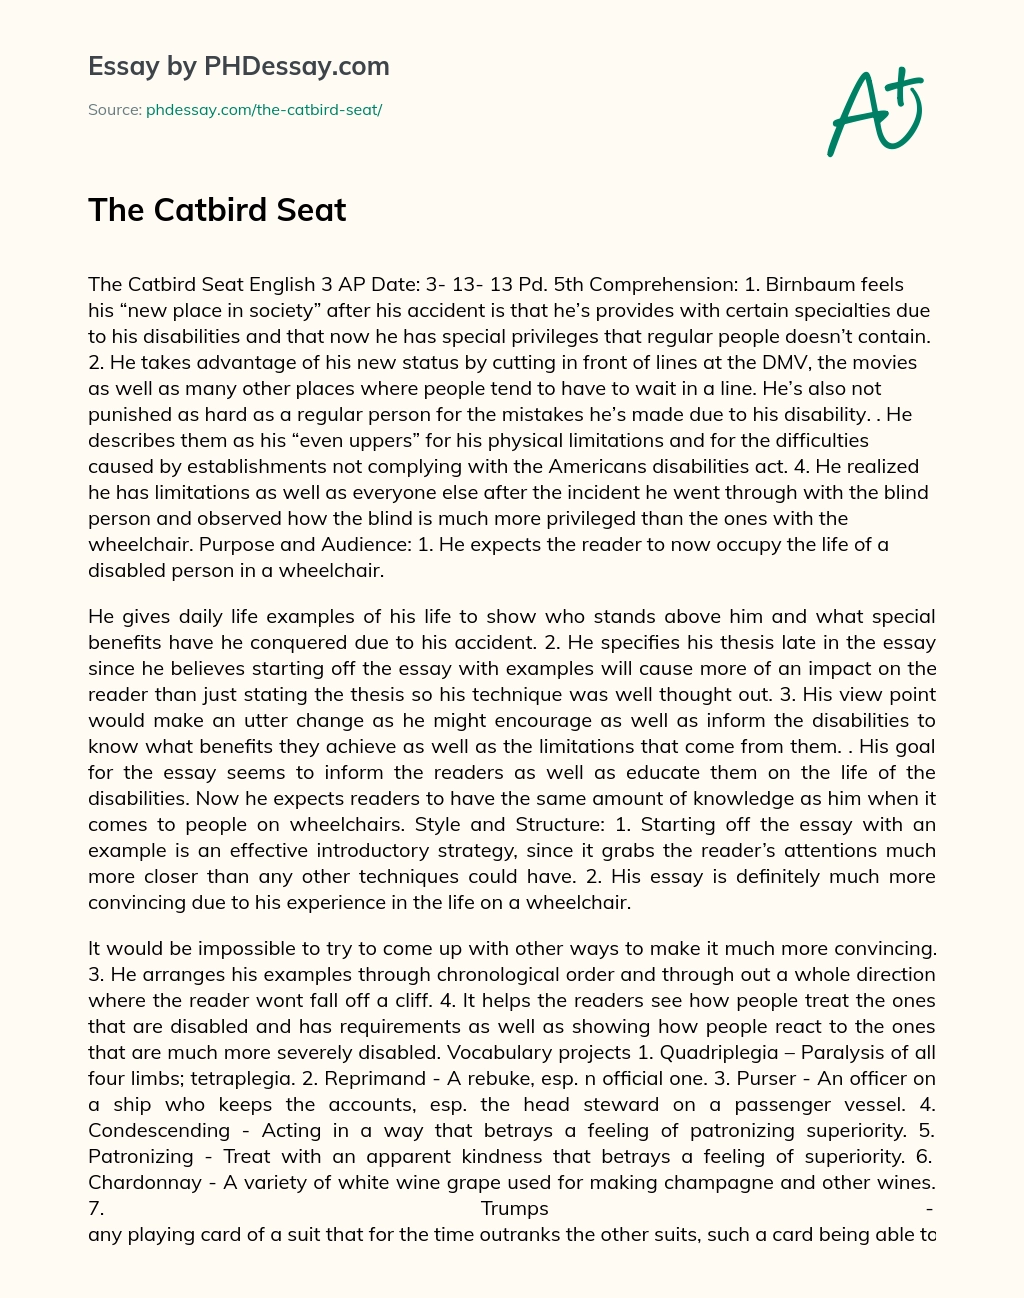 The Catbird Seat essay